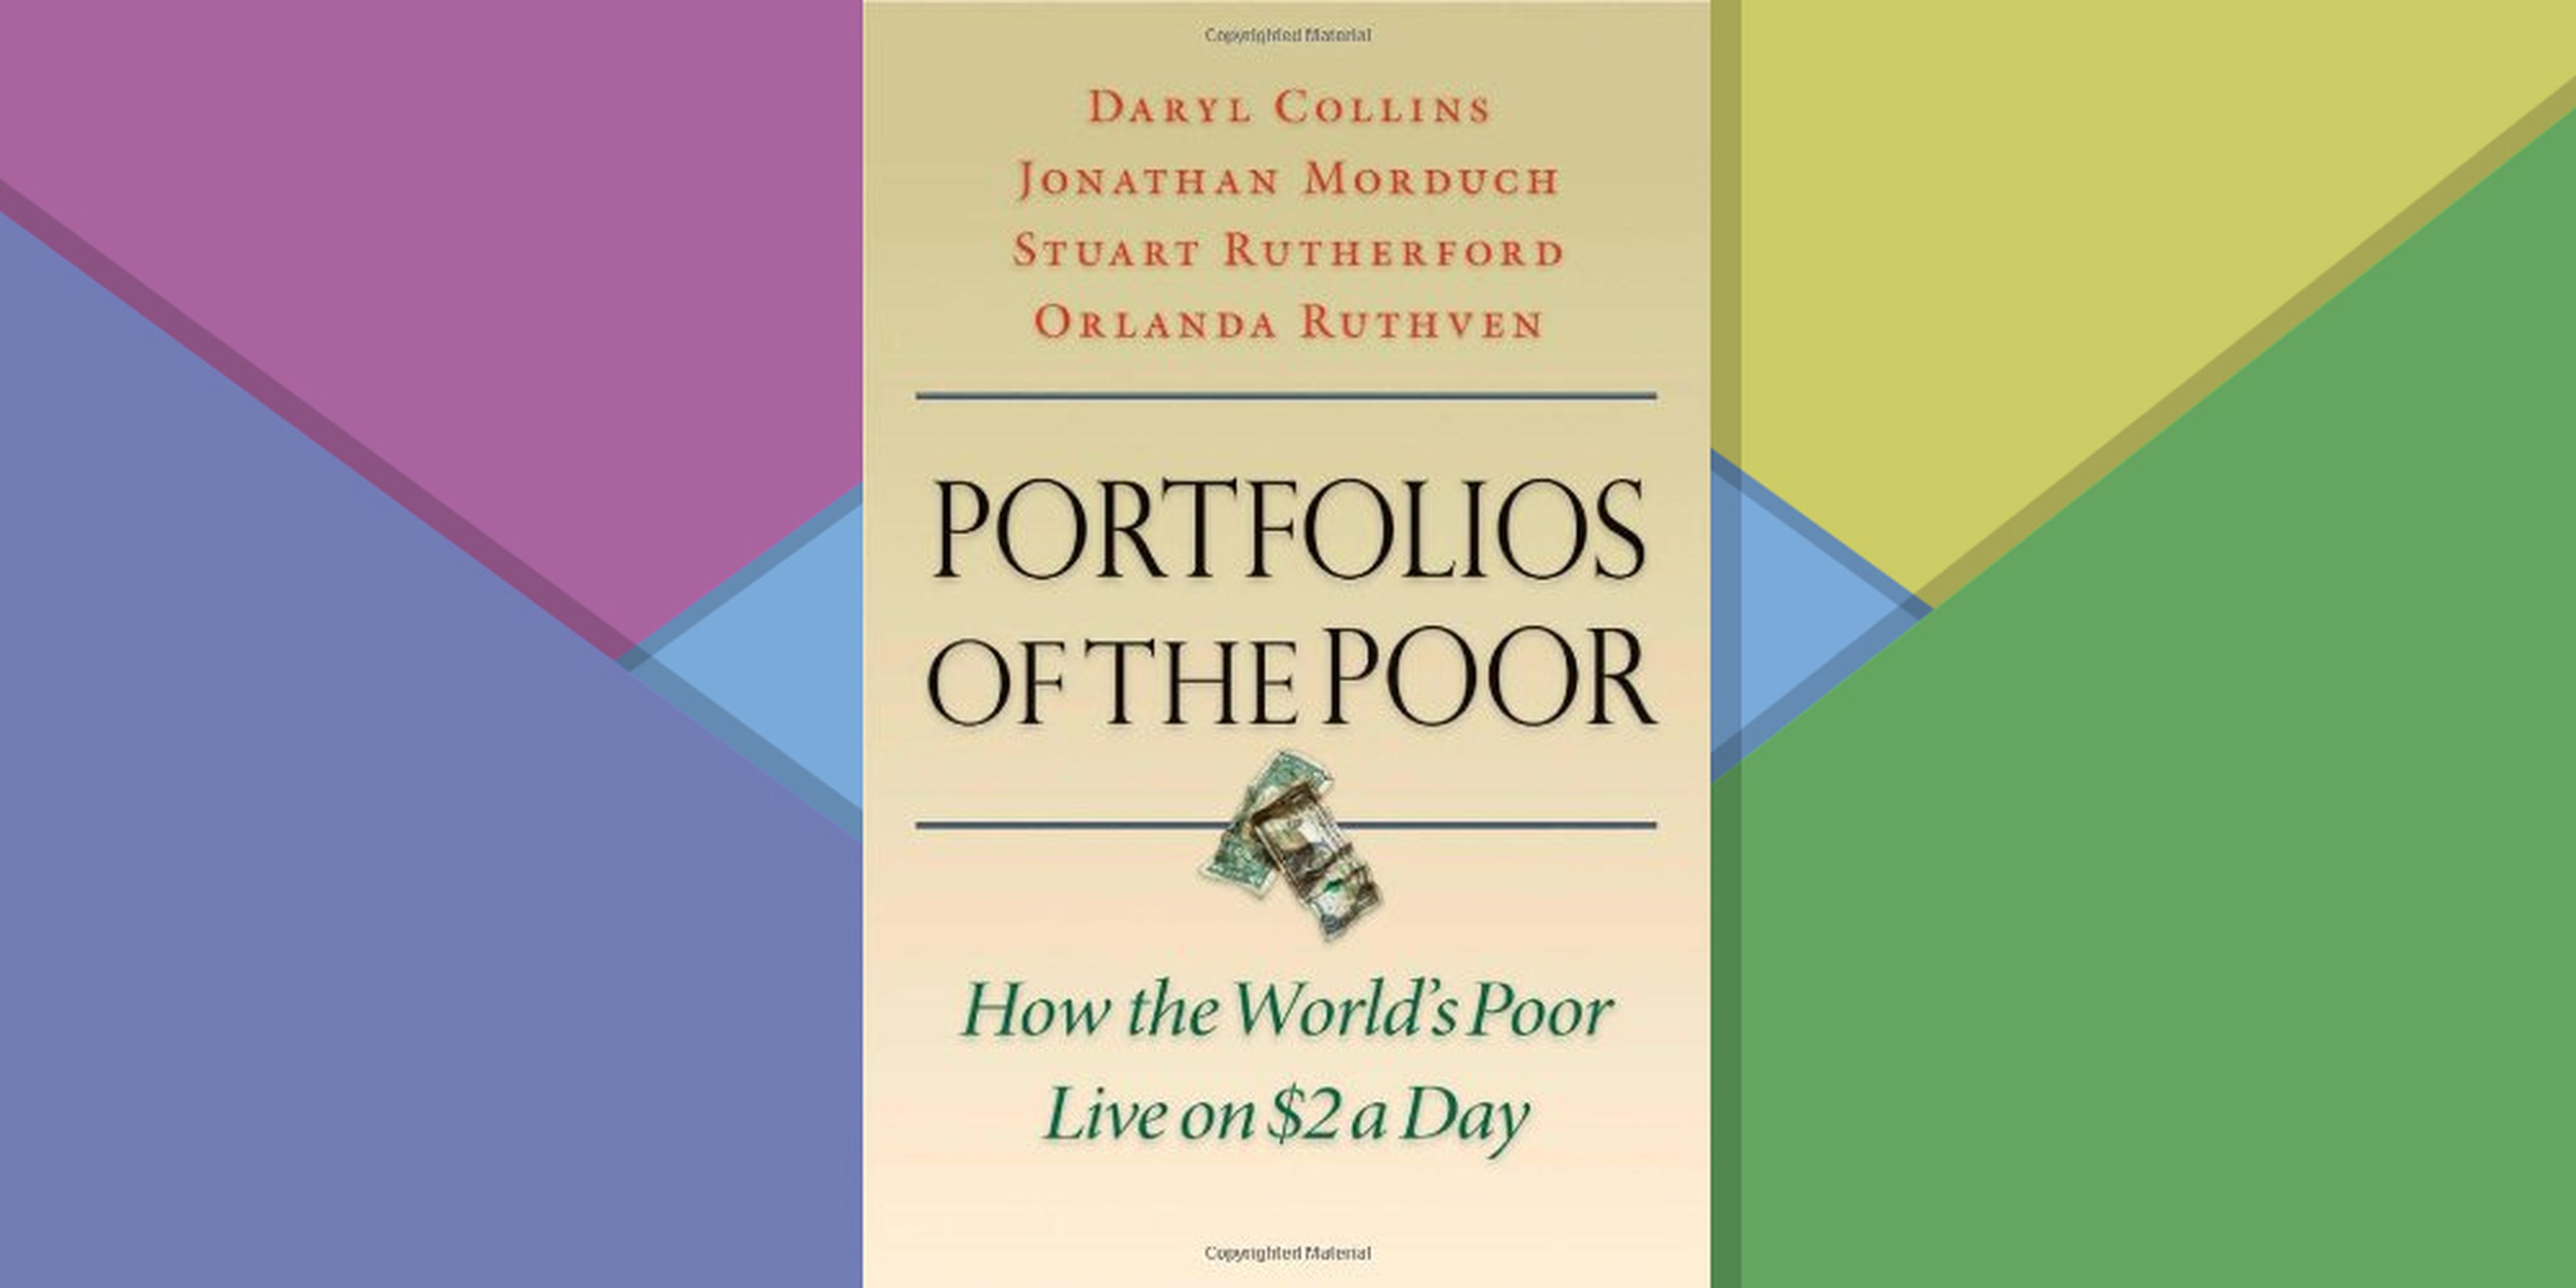 Mark Zuckerberg: "Portfolios of the Poor"